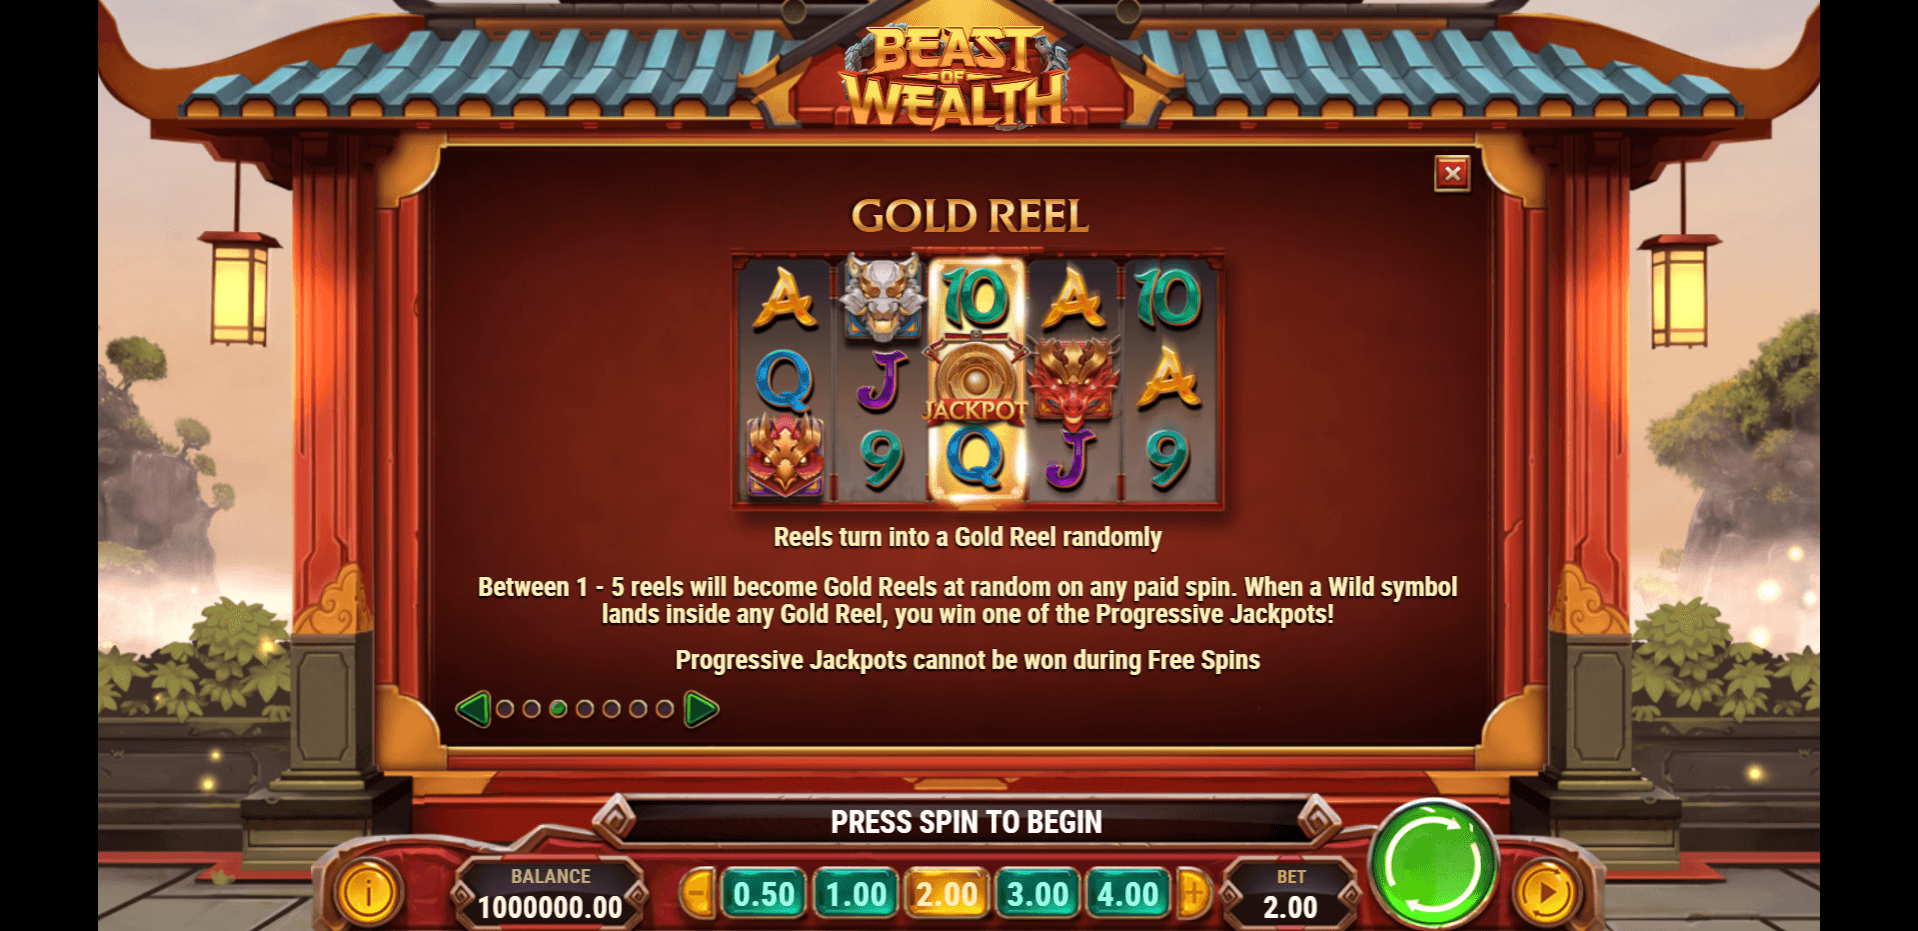 beast of wealth slot machine detail image 2